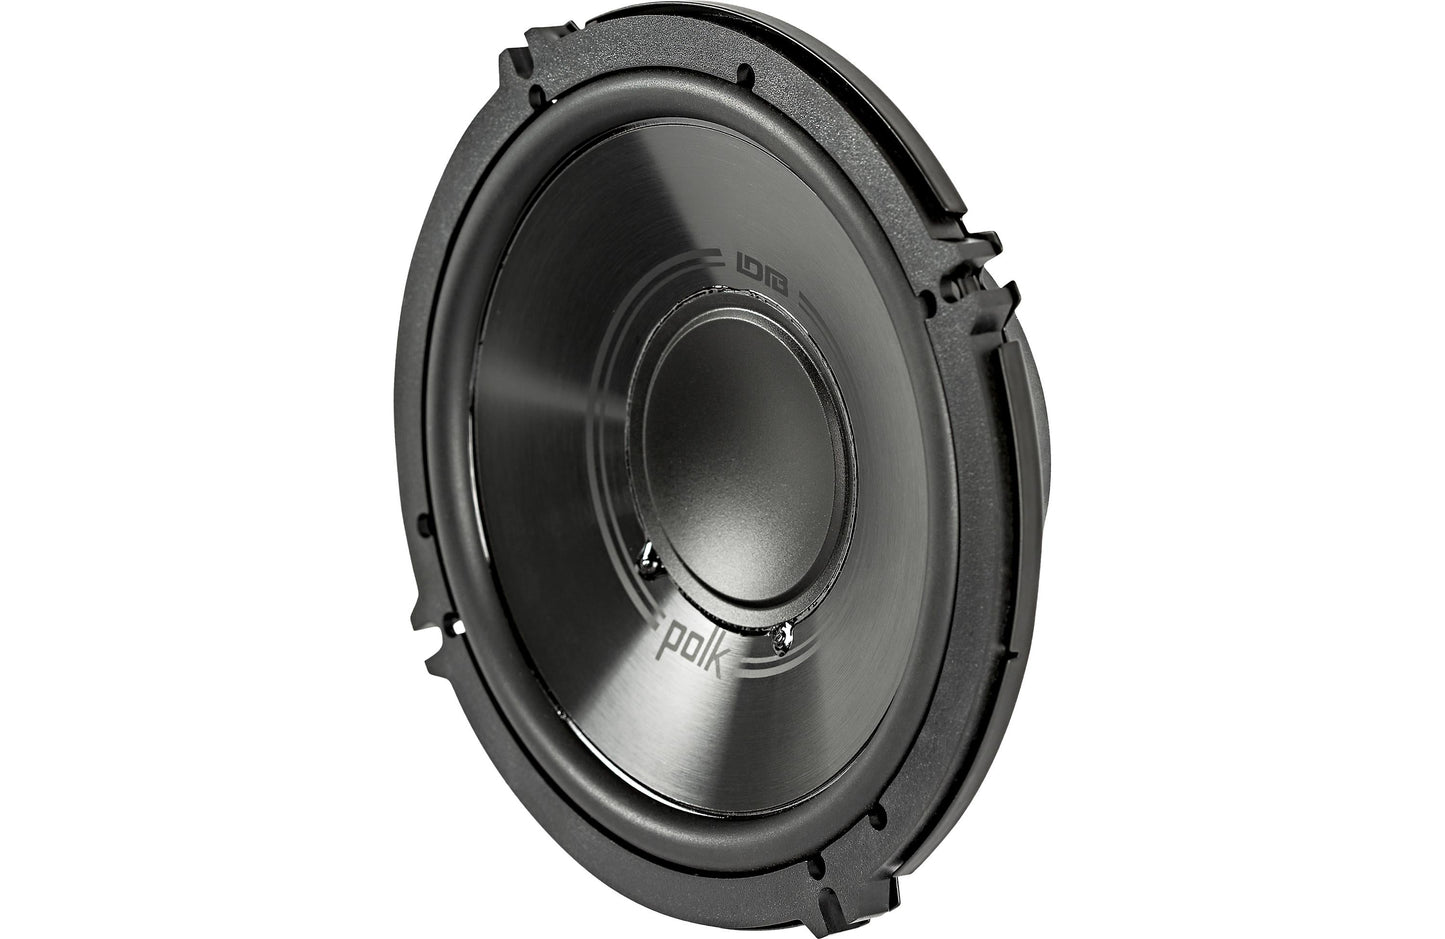 POLK Audio DB5252 5.25" DB+ Component Speakers Marine Certified (100W RMS 300W Peak)